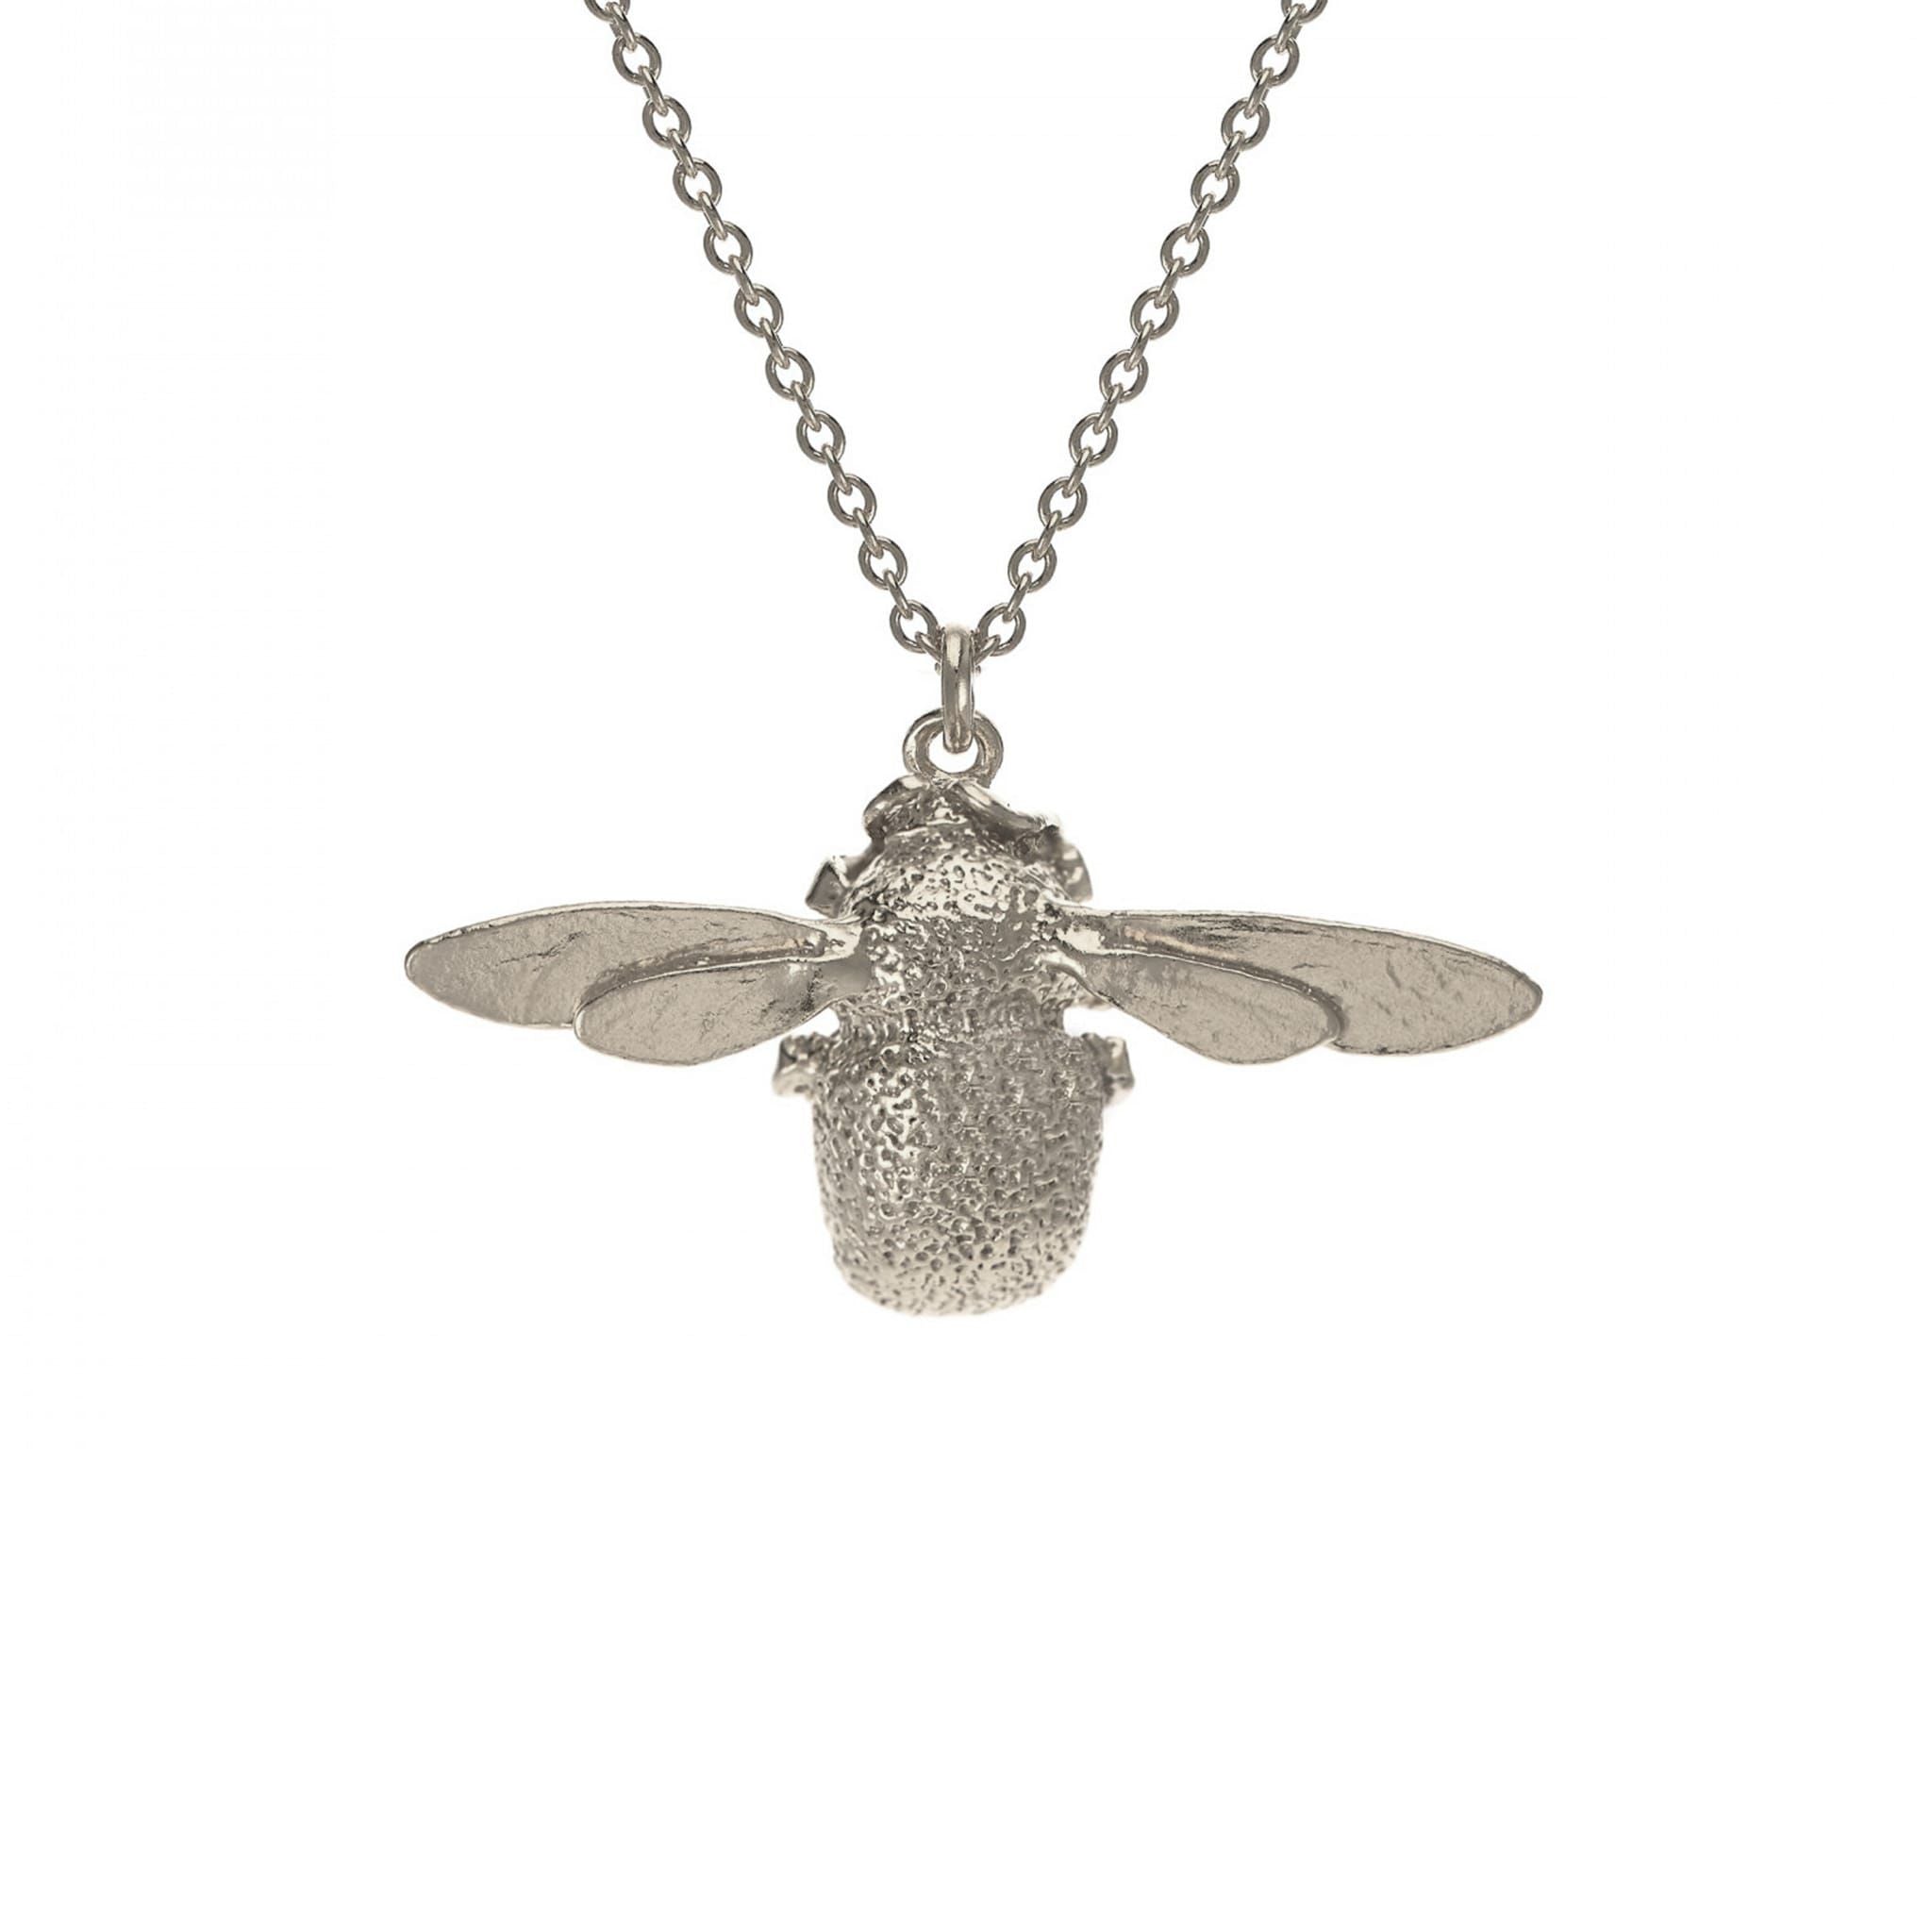 Bumblebee Necklace - Silver